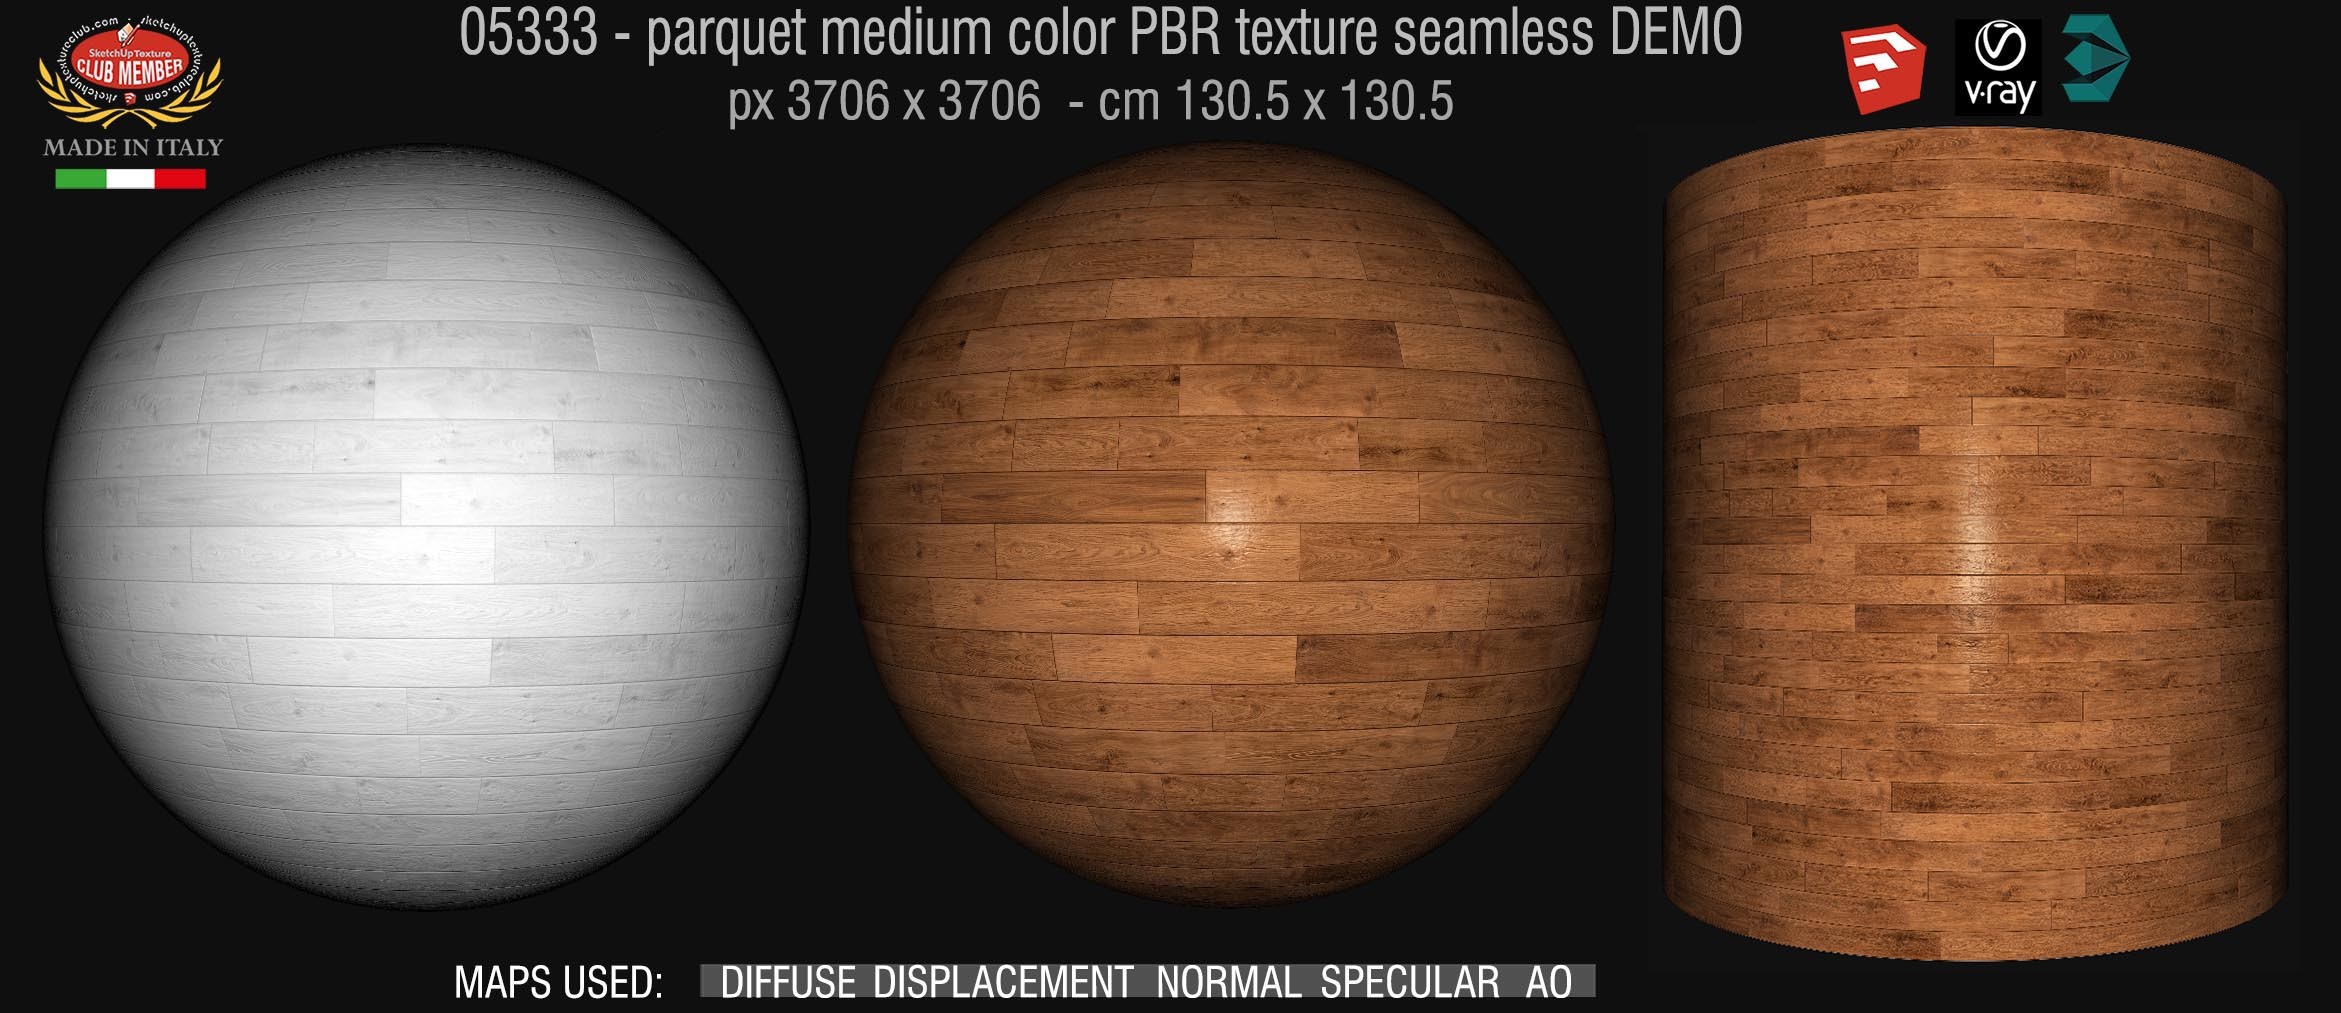 05333 parquet medium color PBR texture seamless DEMO